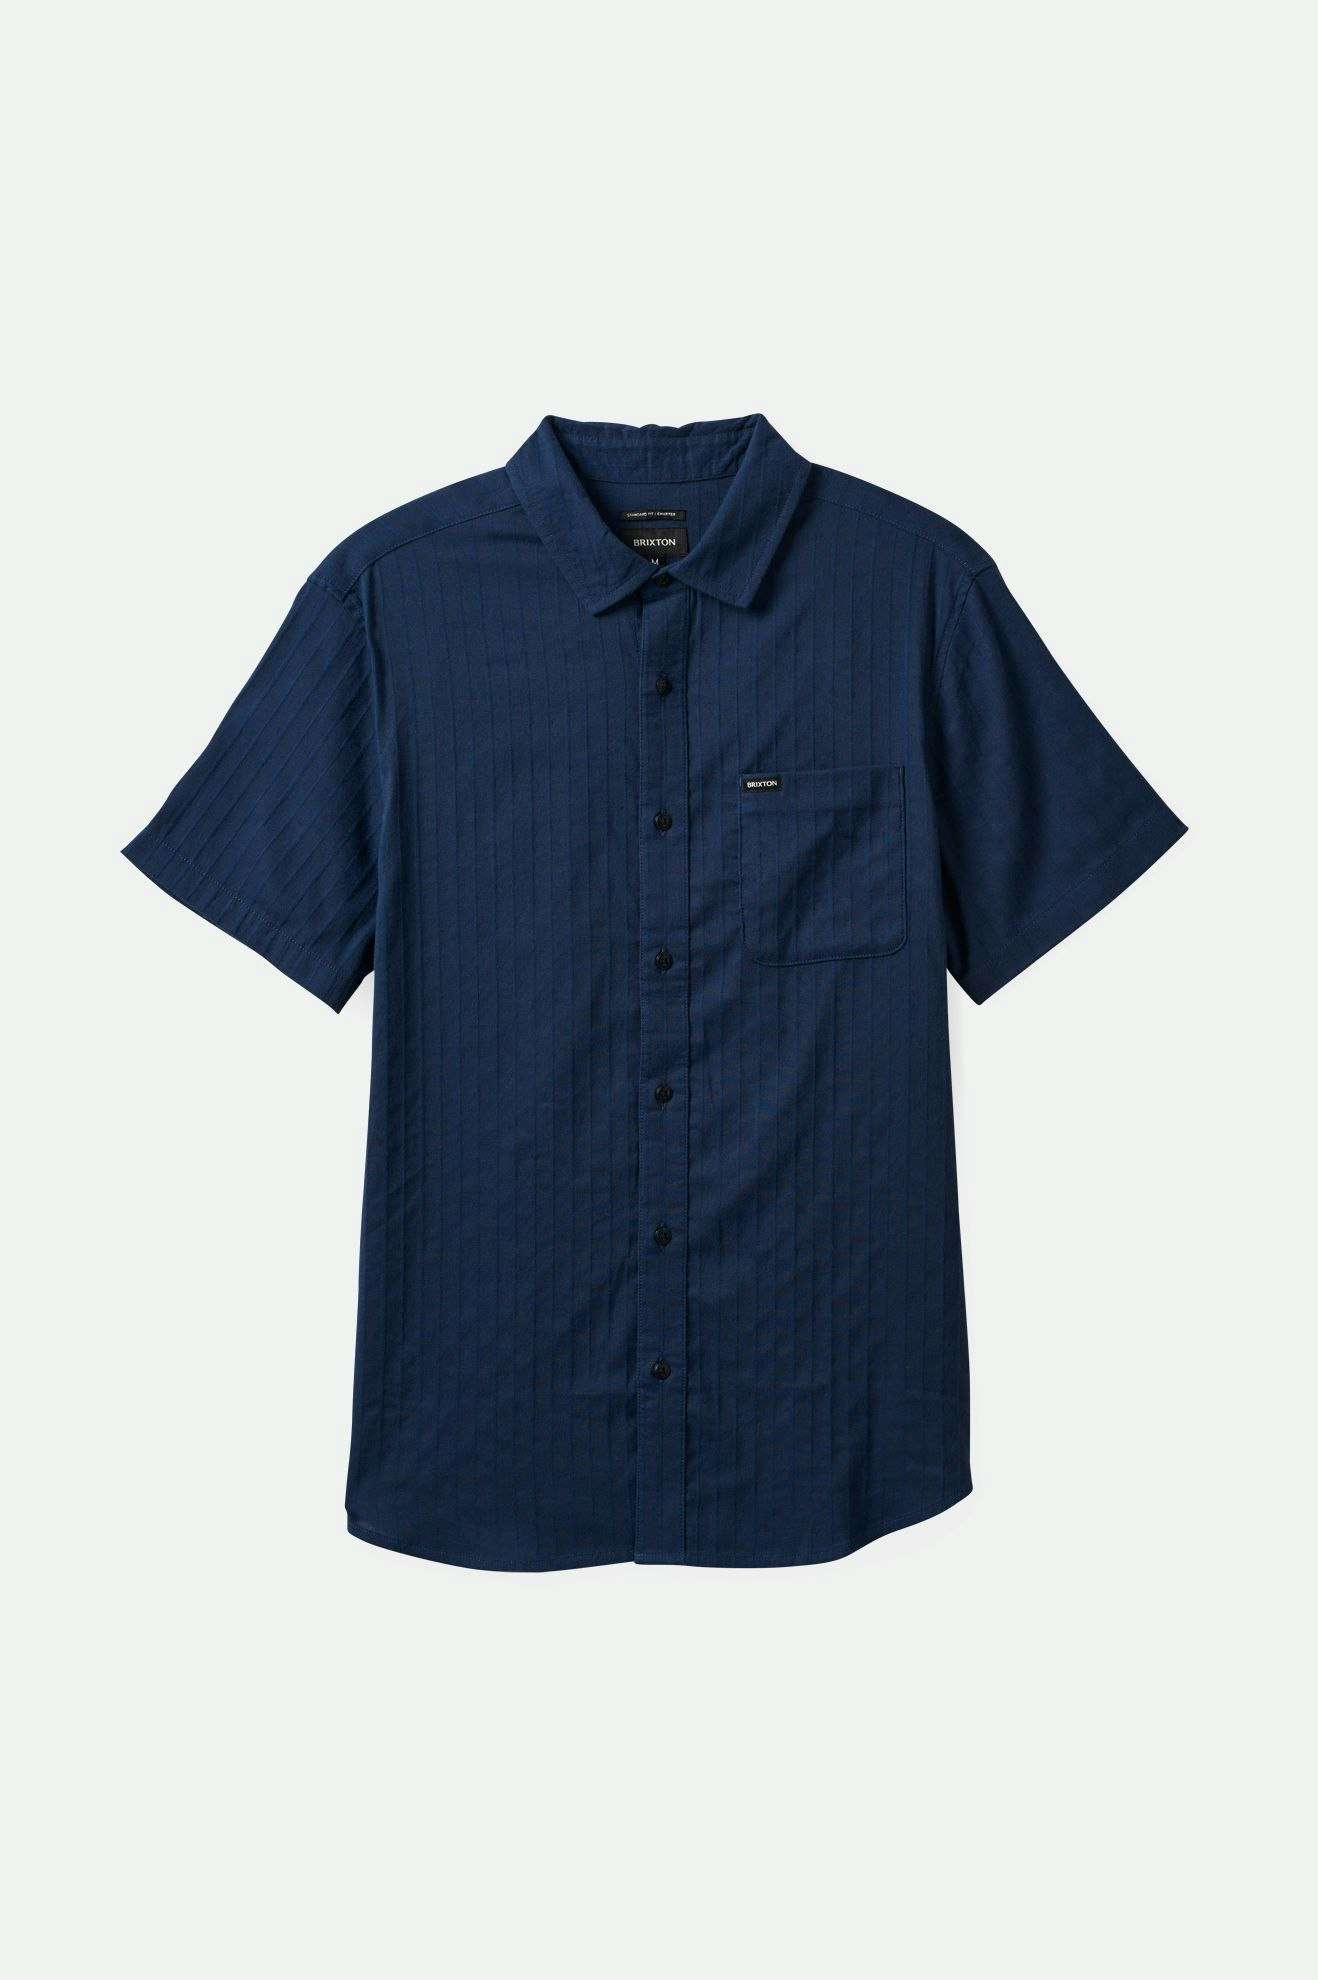 Brixton Men's Charter Stripe S/S Woven Shirt - Washed Navy/Black | Main